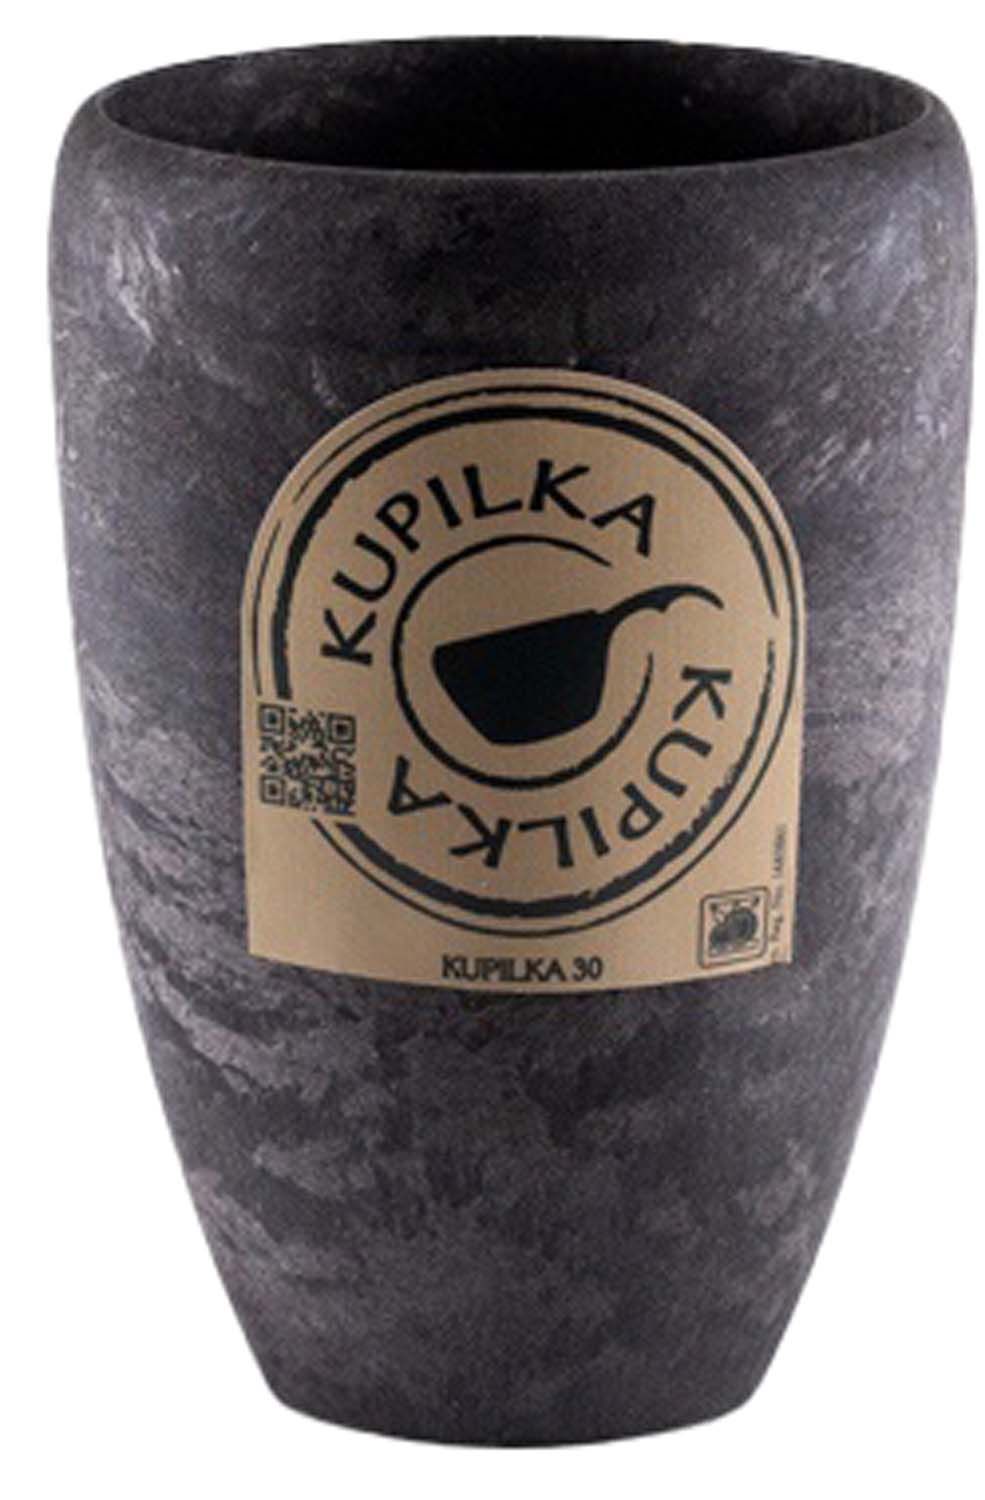 Kupilka Coffe Go Cup 30 Black